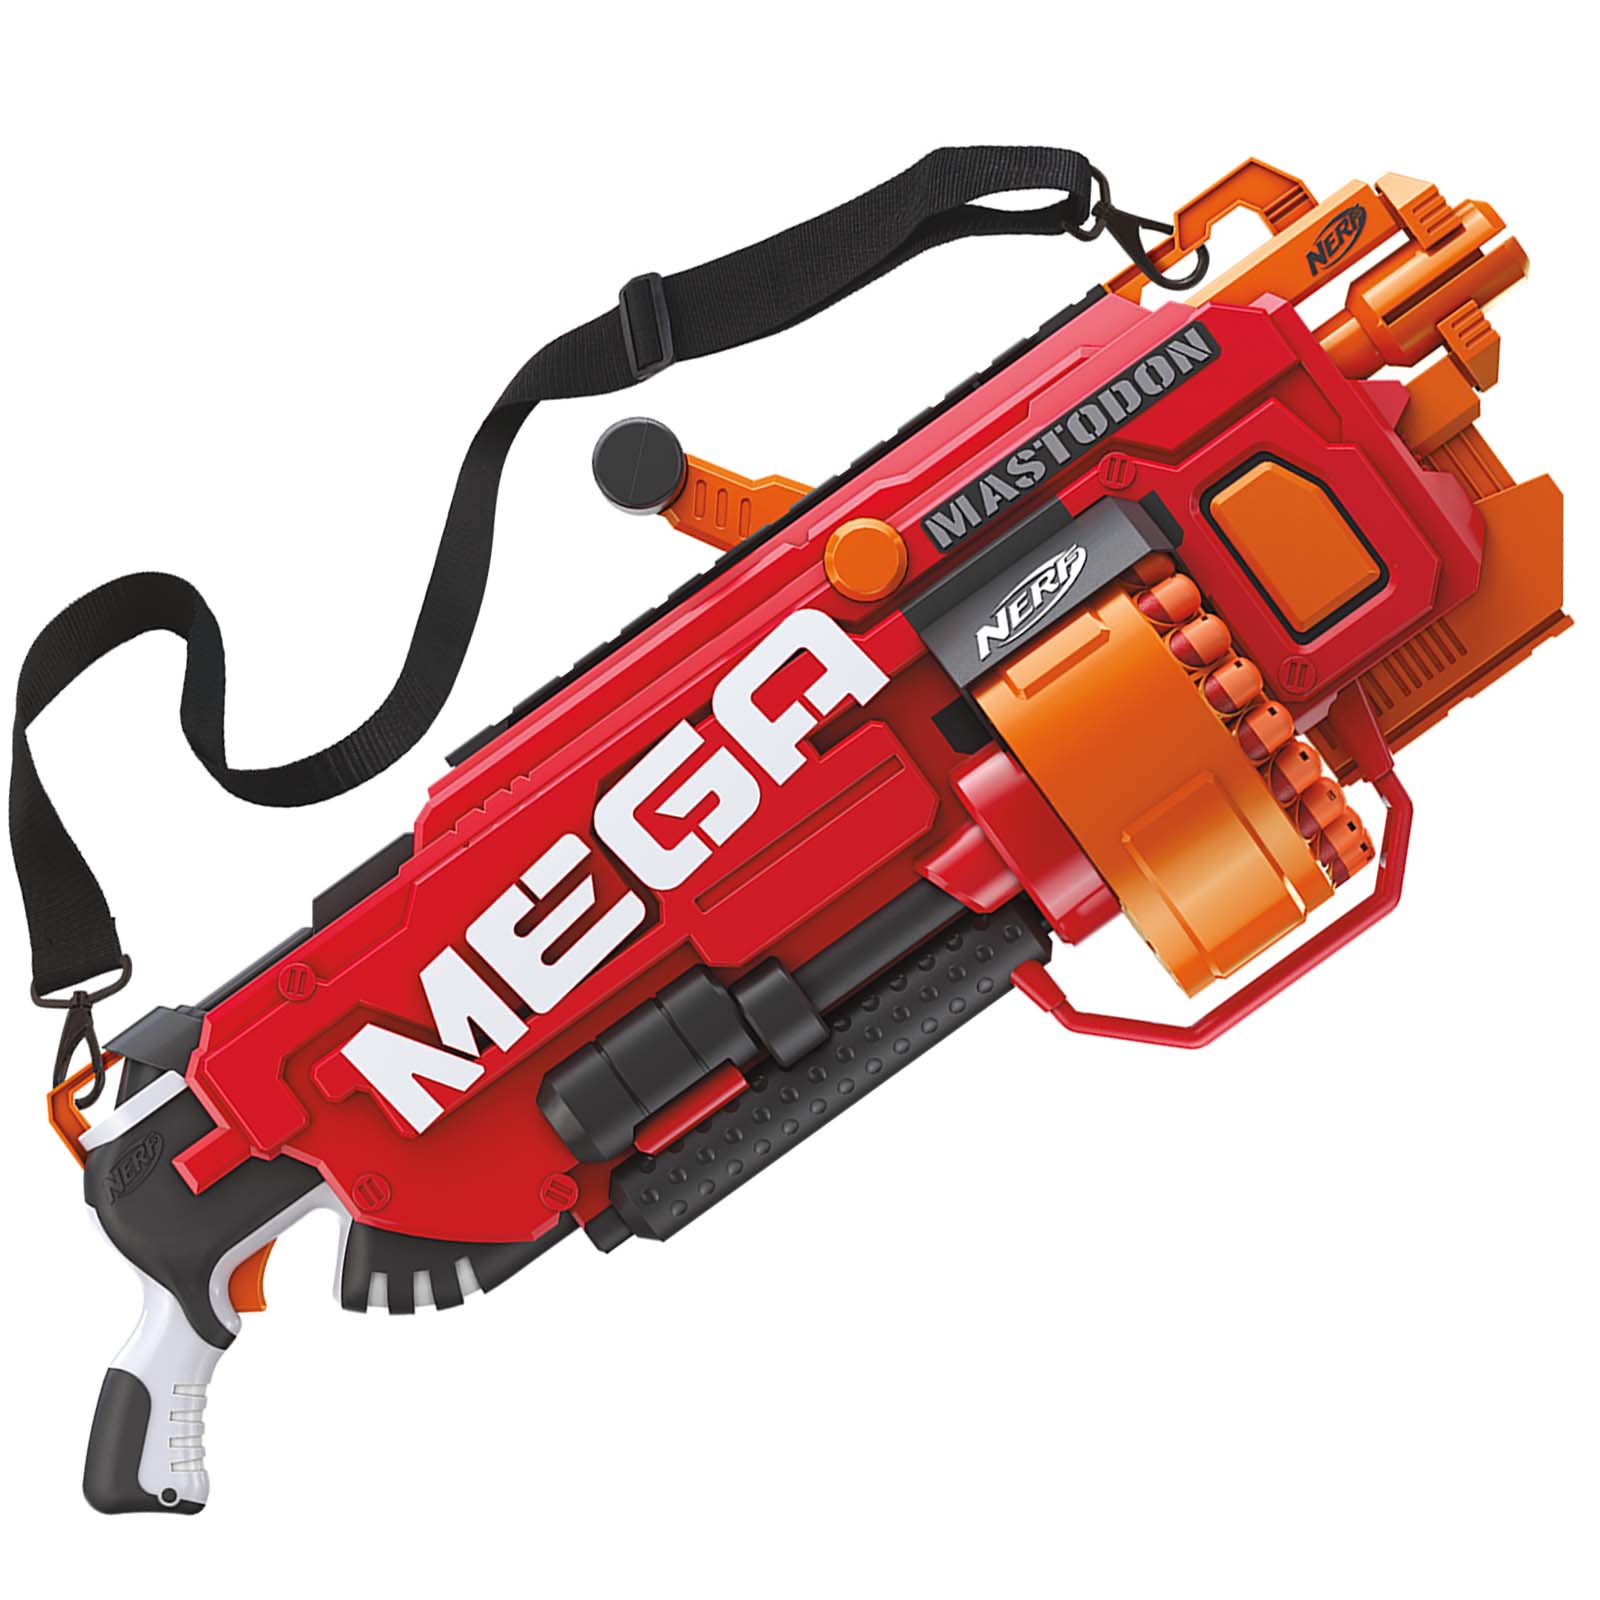 Mastodon Nerf N Strike Mega Dart Cannon Nerf Gun Rentals